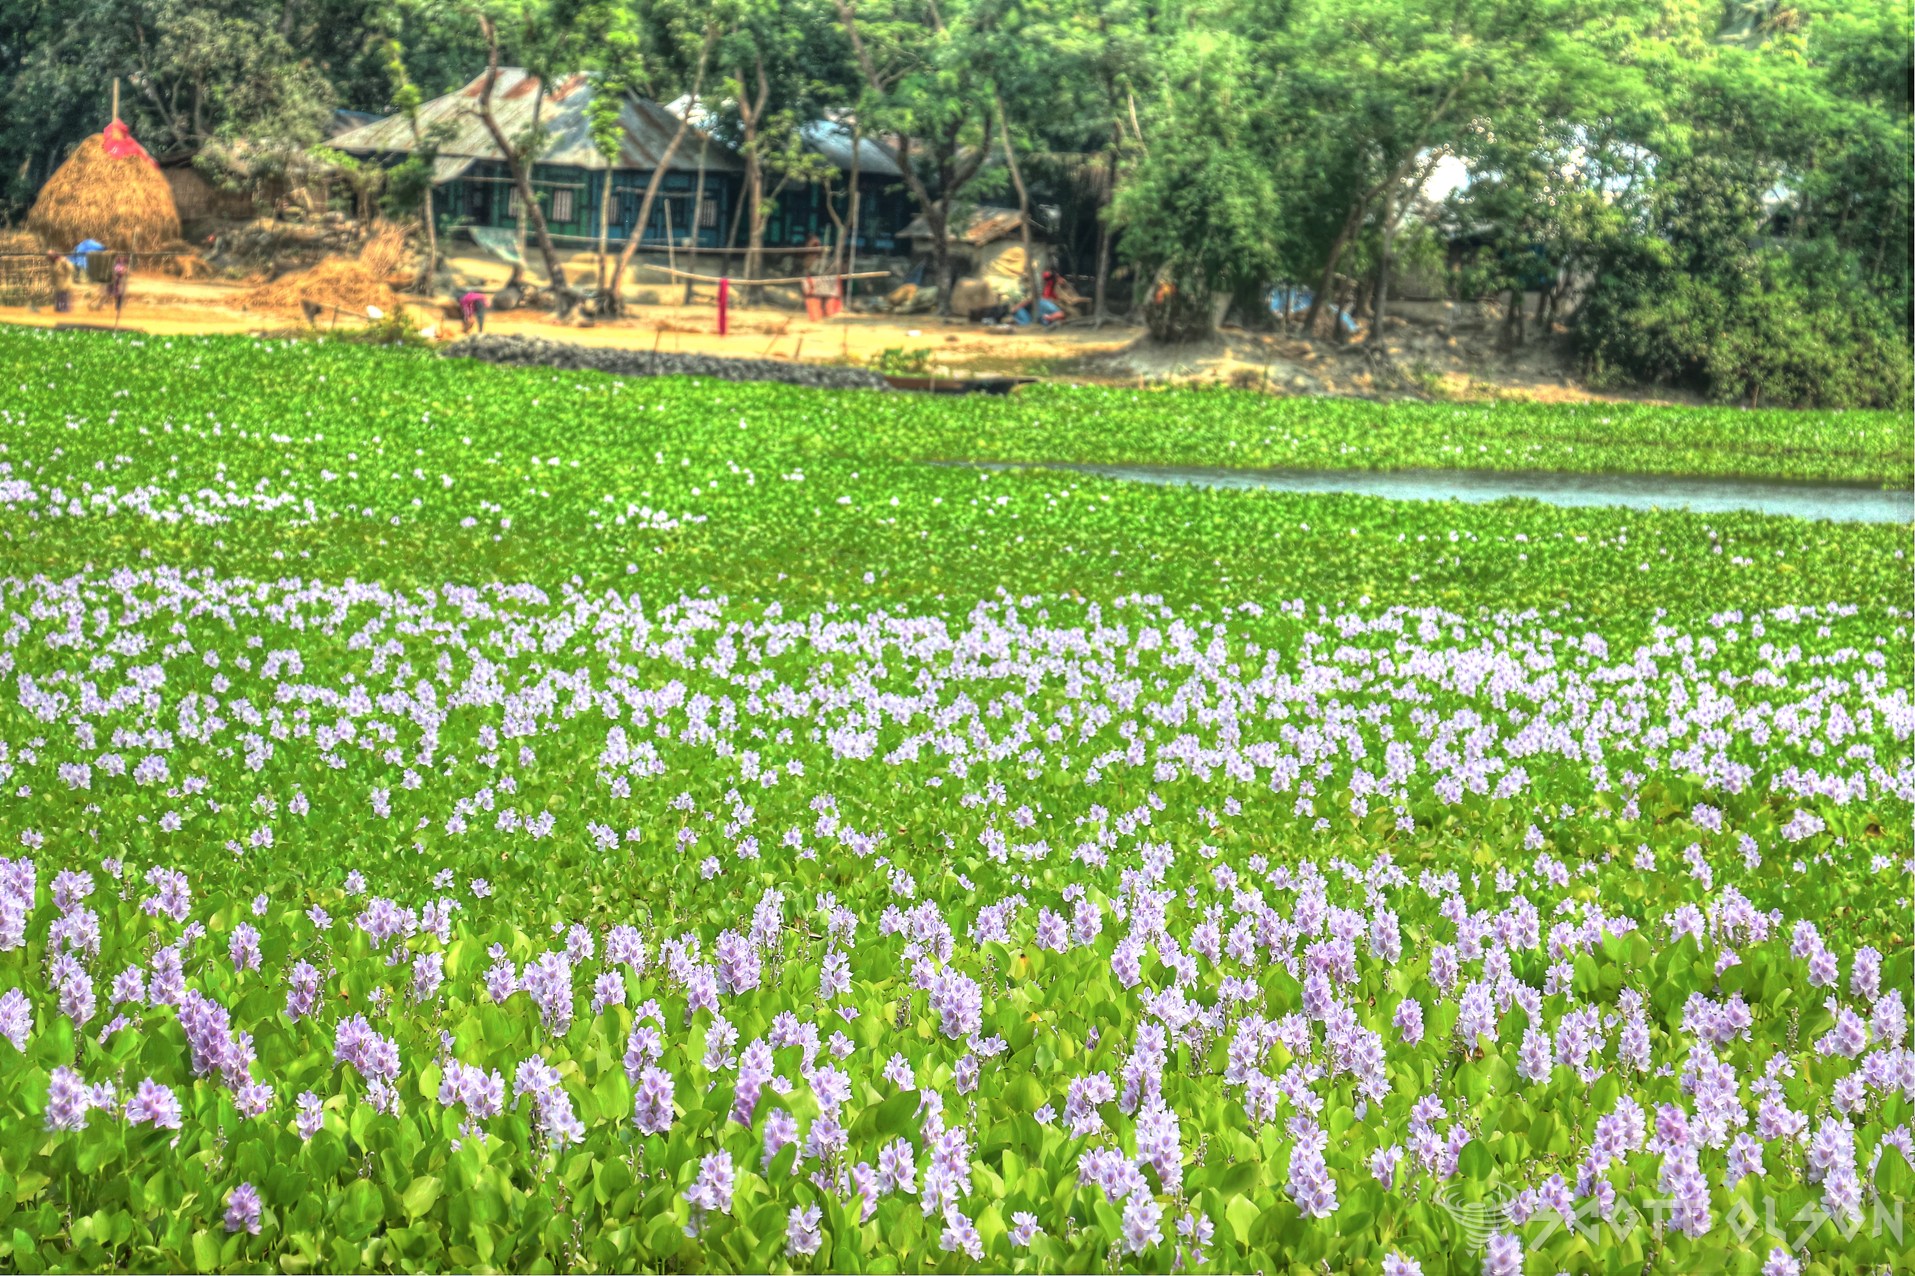 field-of-lily-village-bangladesh.jpg